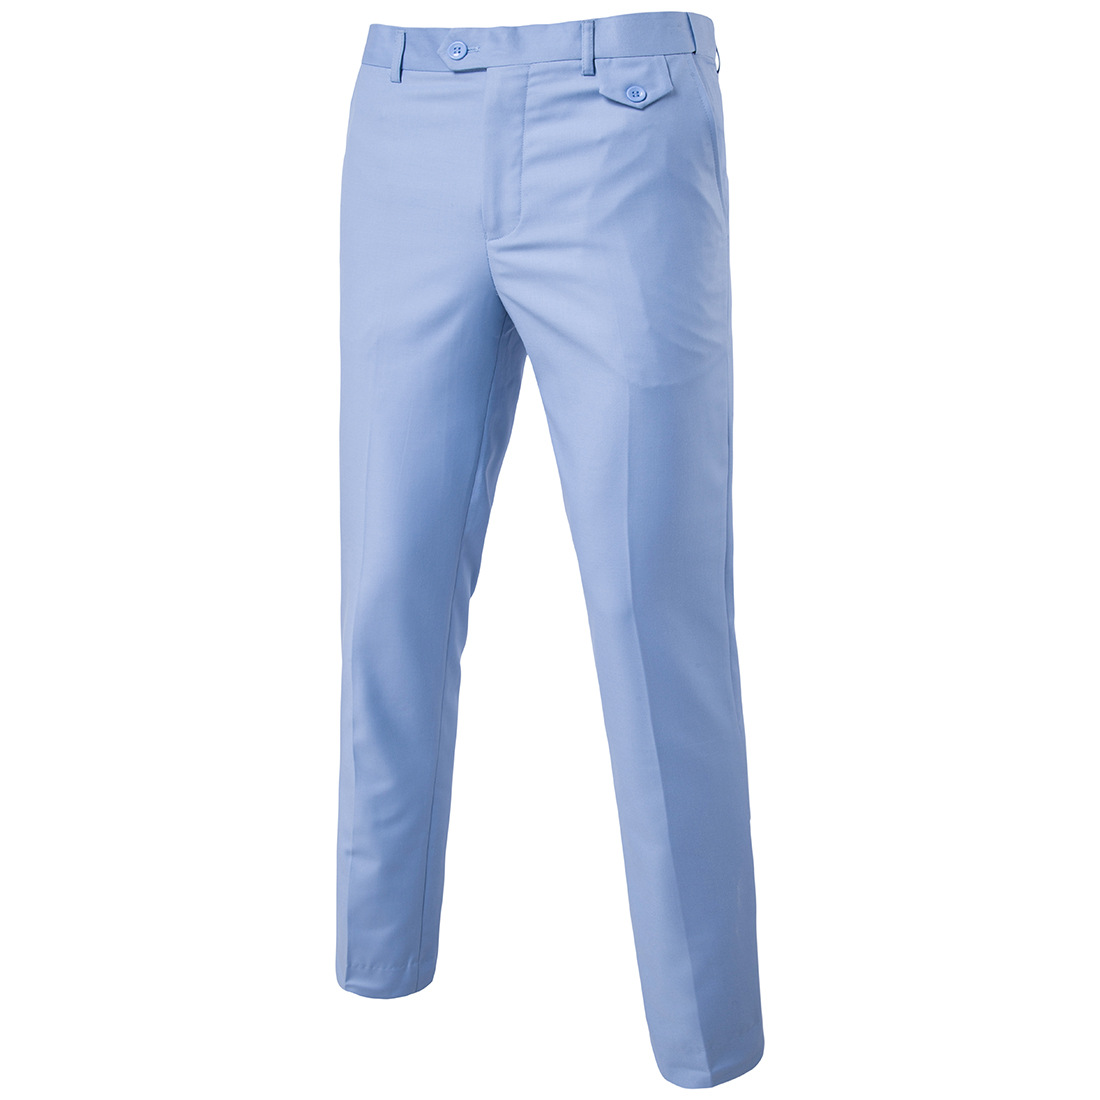 Men Suit Pants Cotton Solid Casual Business Formal Bridegroom Plus Size Wedding Trousers light blue